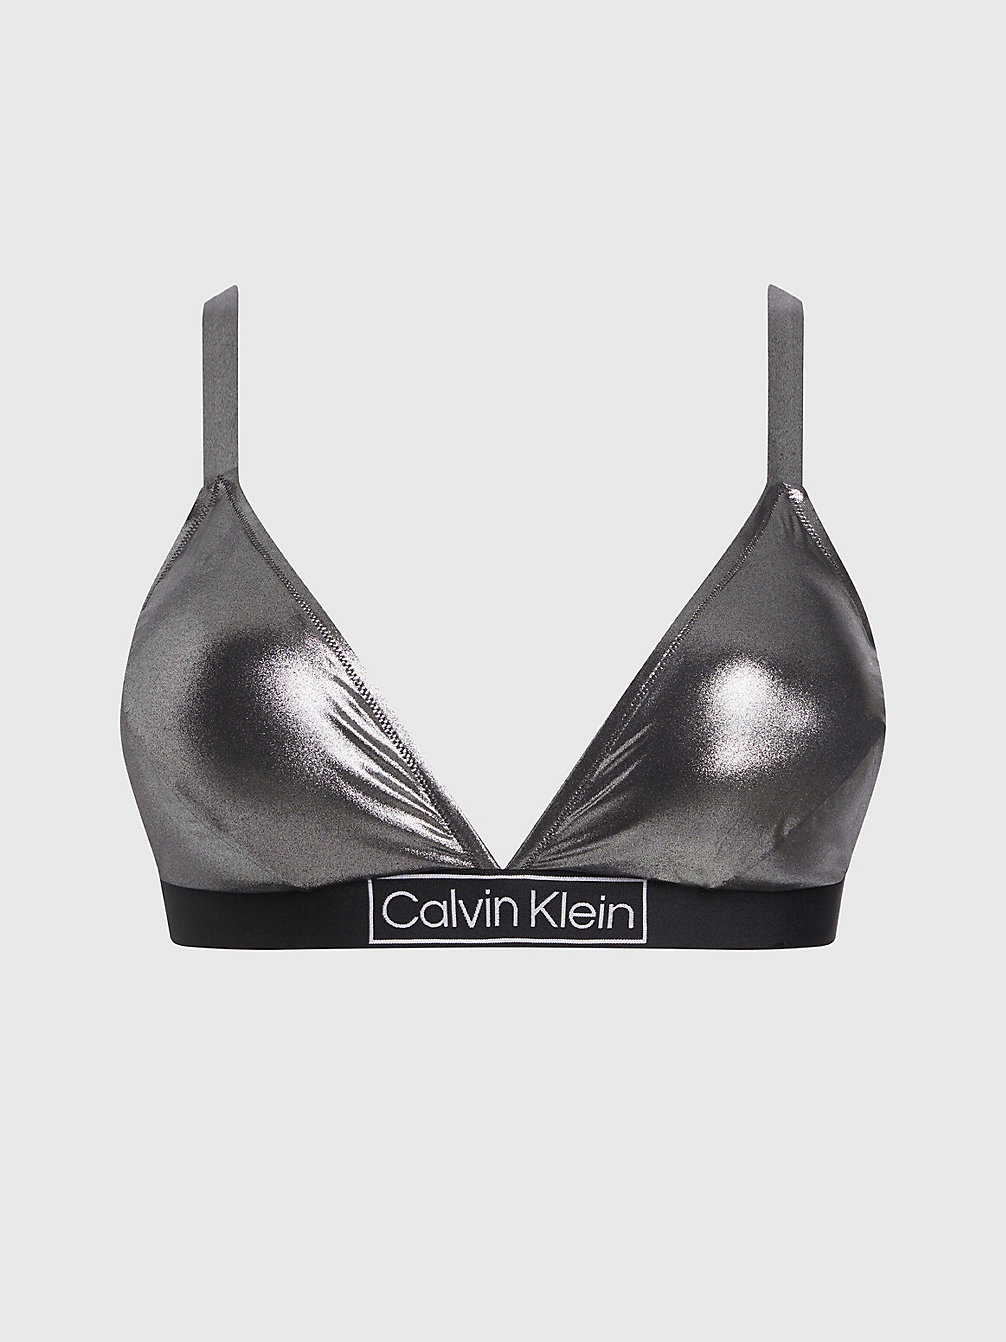 PVH BLACK > Верх бикини-треугольник плюс-сайз -  Core Festive > undefined Женщины - Calvin Klein